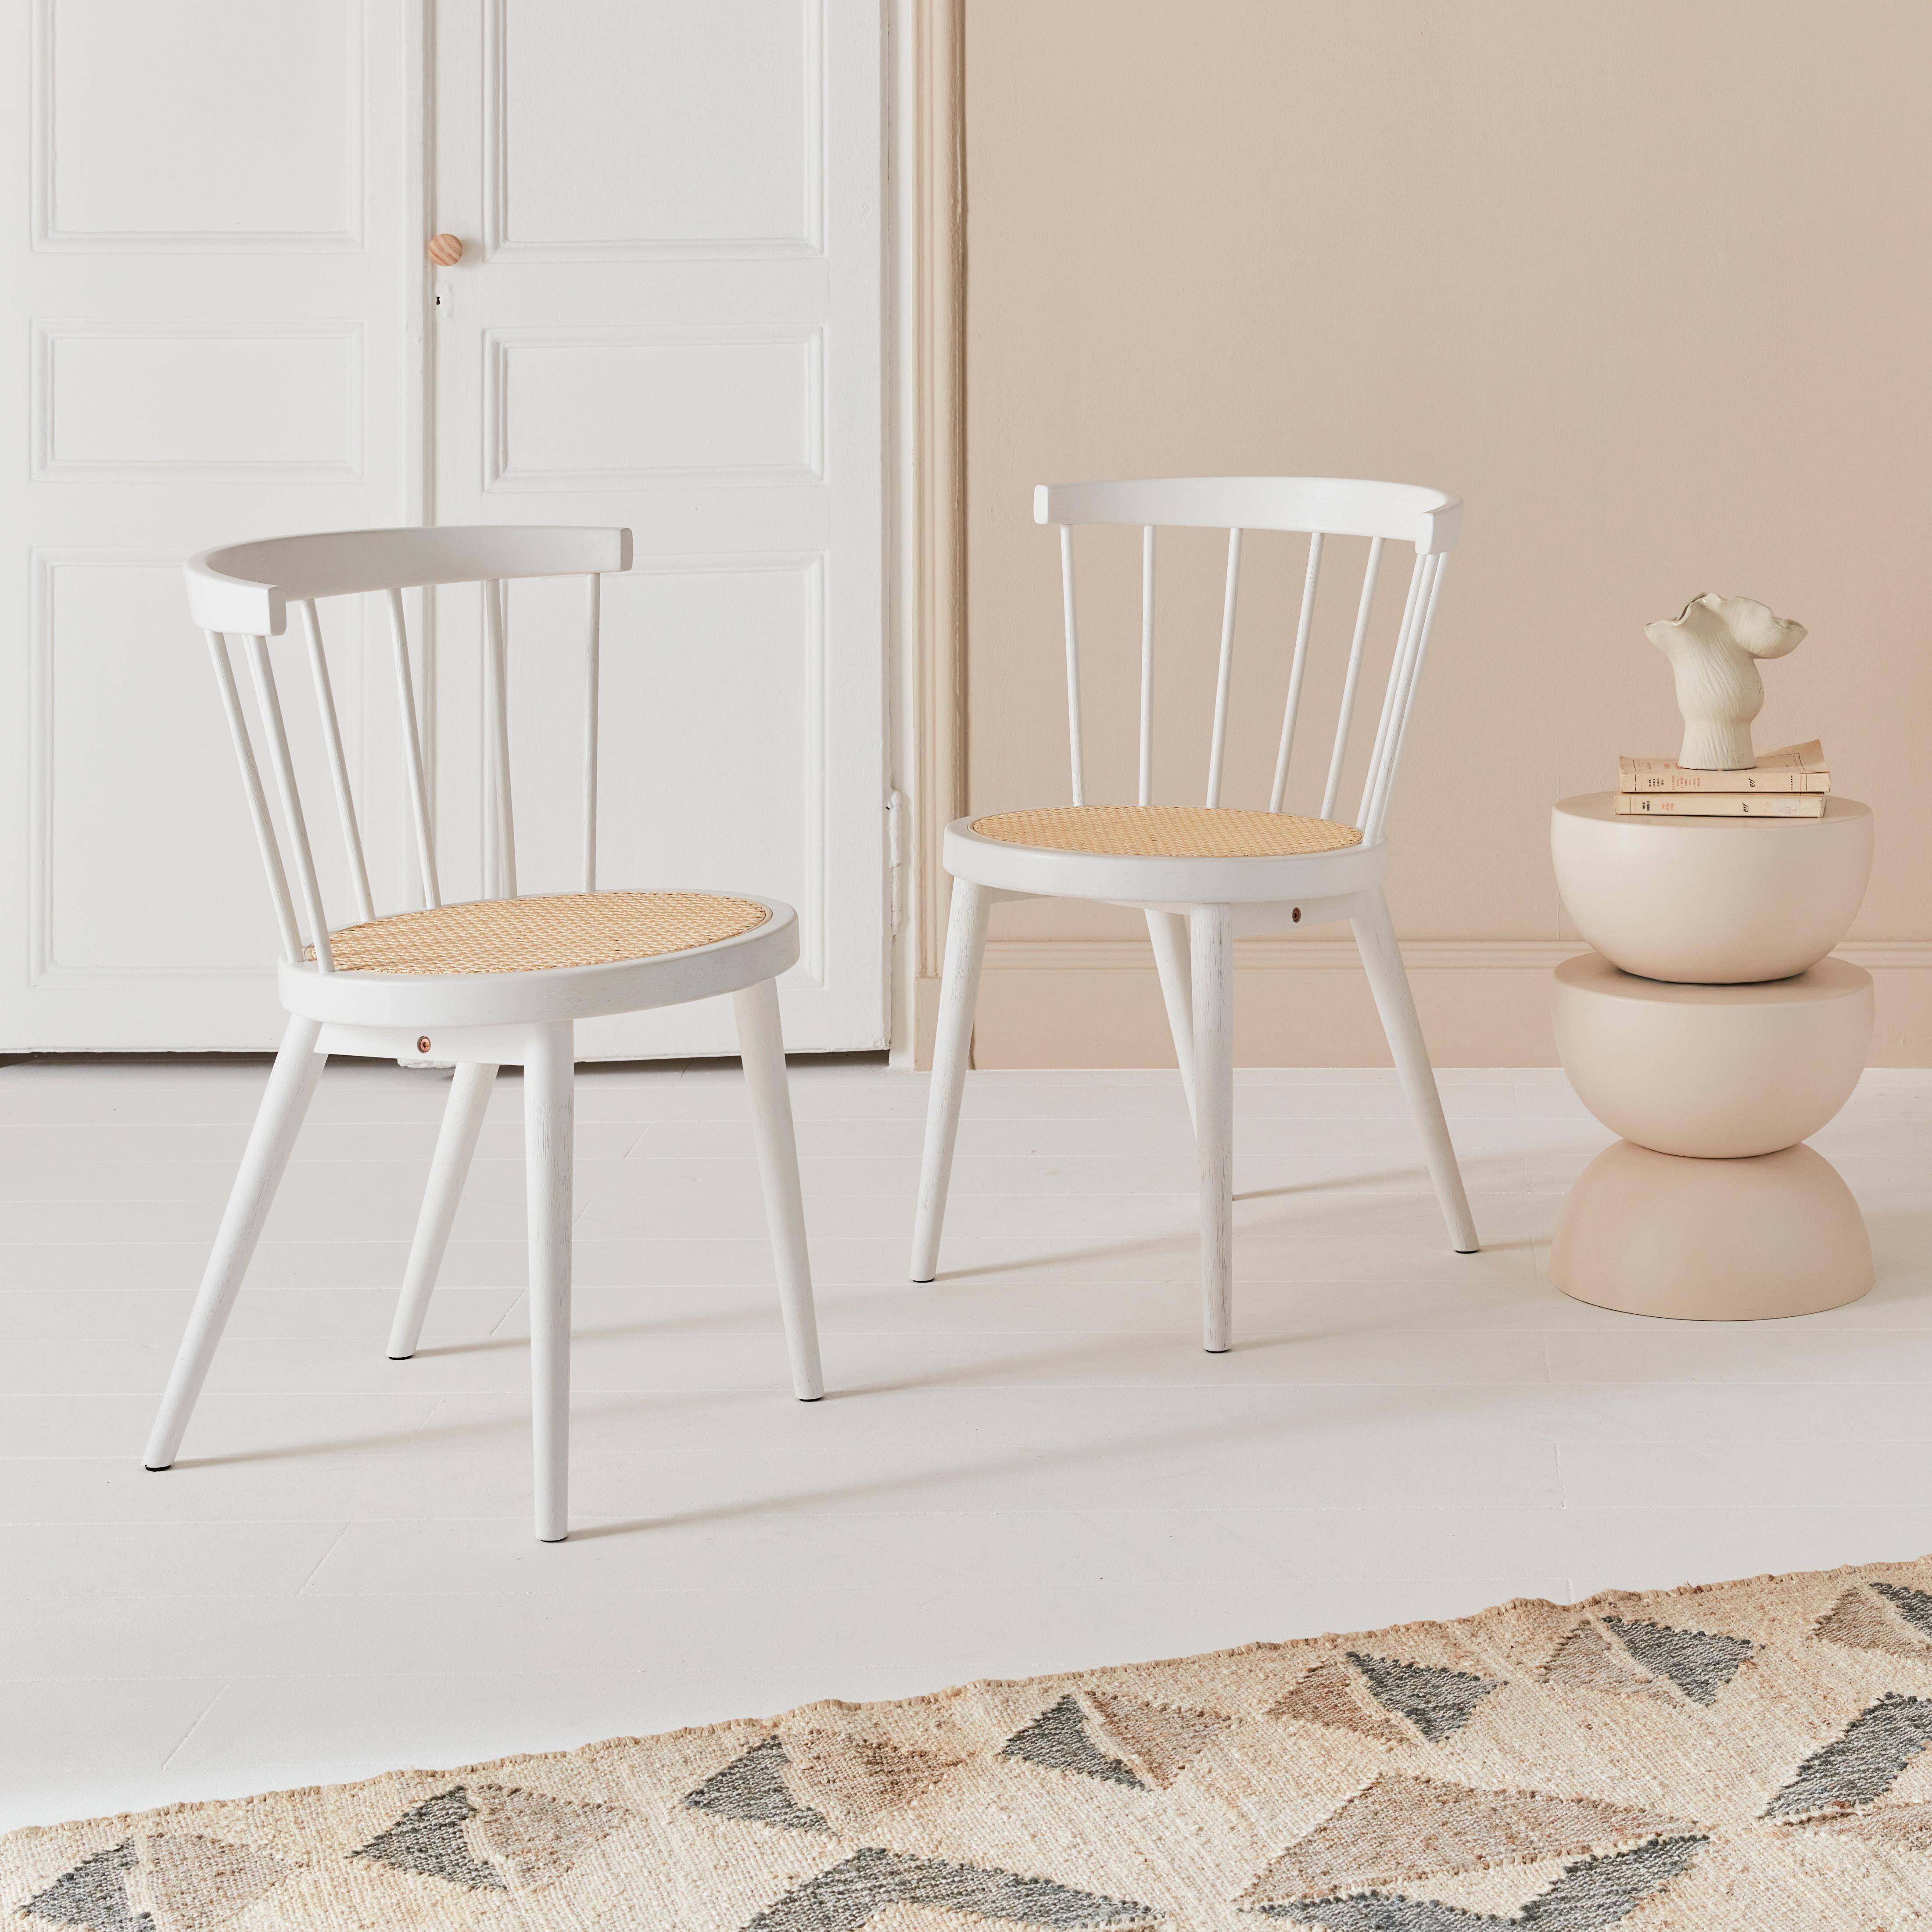 Pair of  Wood and Cane Chairs, Bohemian Spirit, White, L53 x W53.5 x H 6 cm Photo2